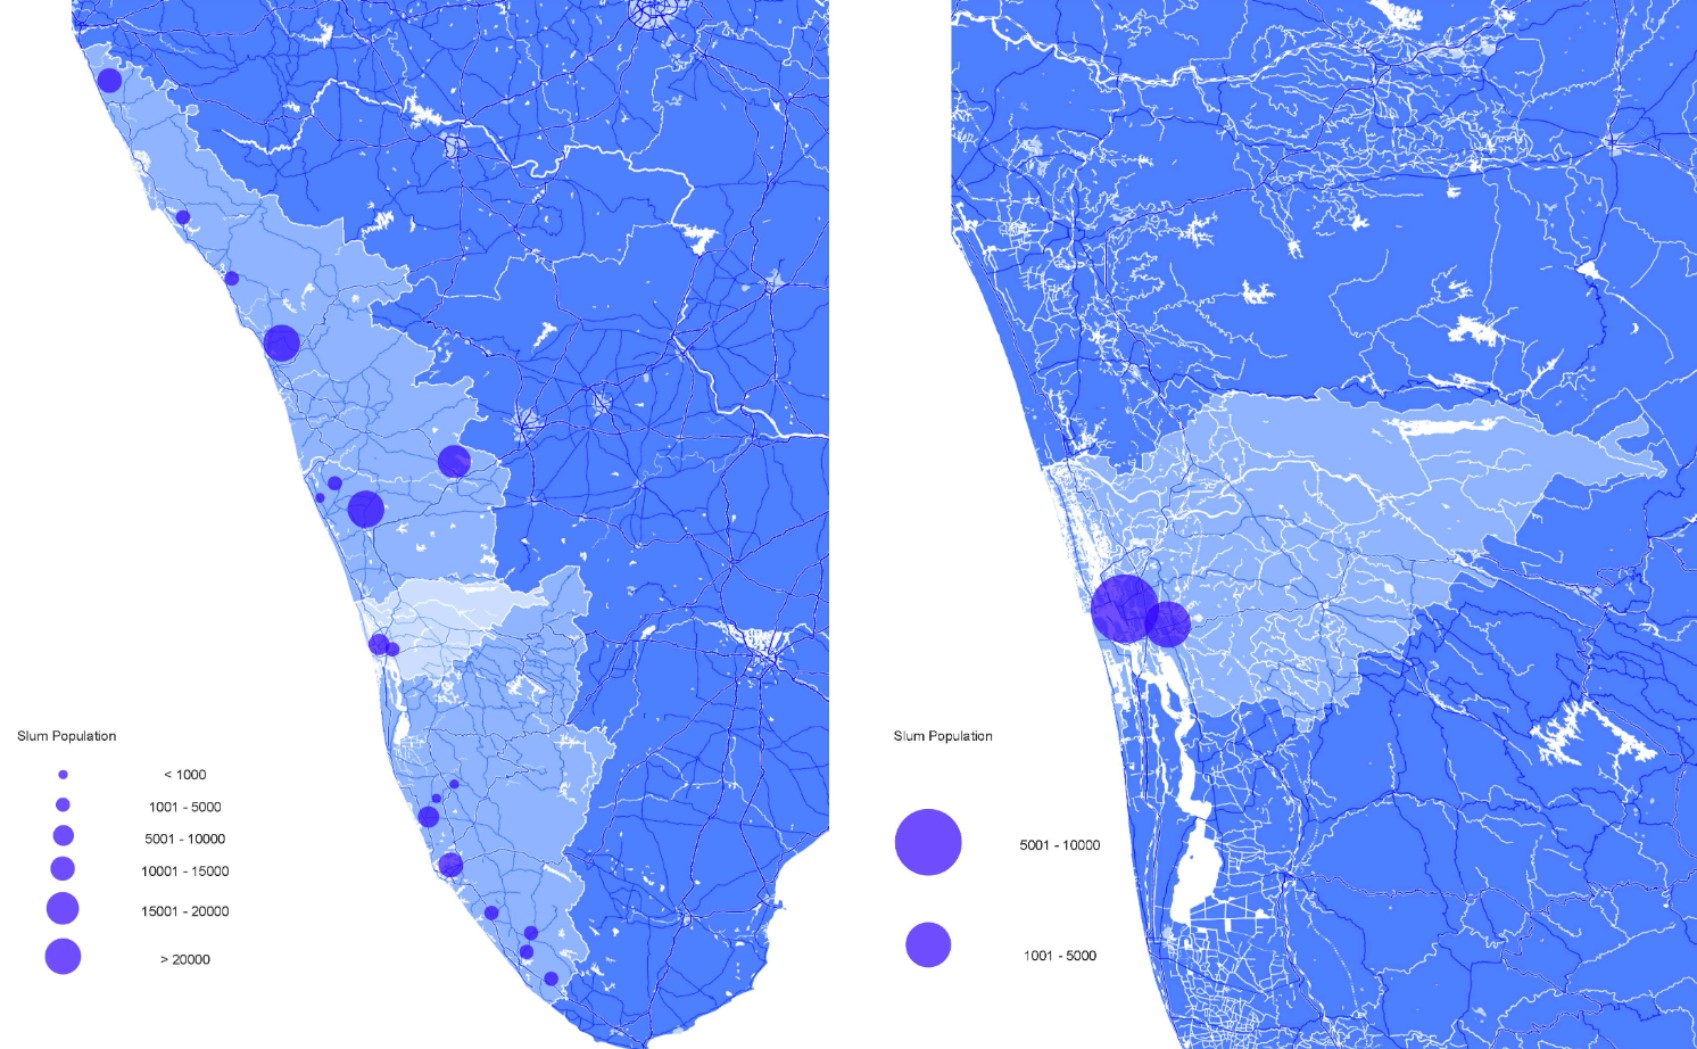 Population profile of slum aggregates in Kerala and Ernakulam - International Journal of Advanced Multidisciplinary Research 2019